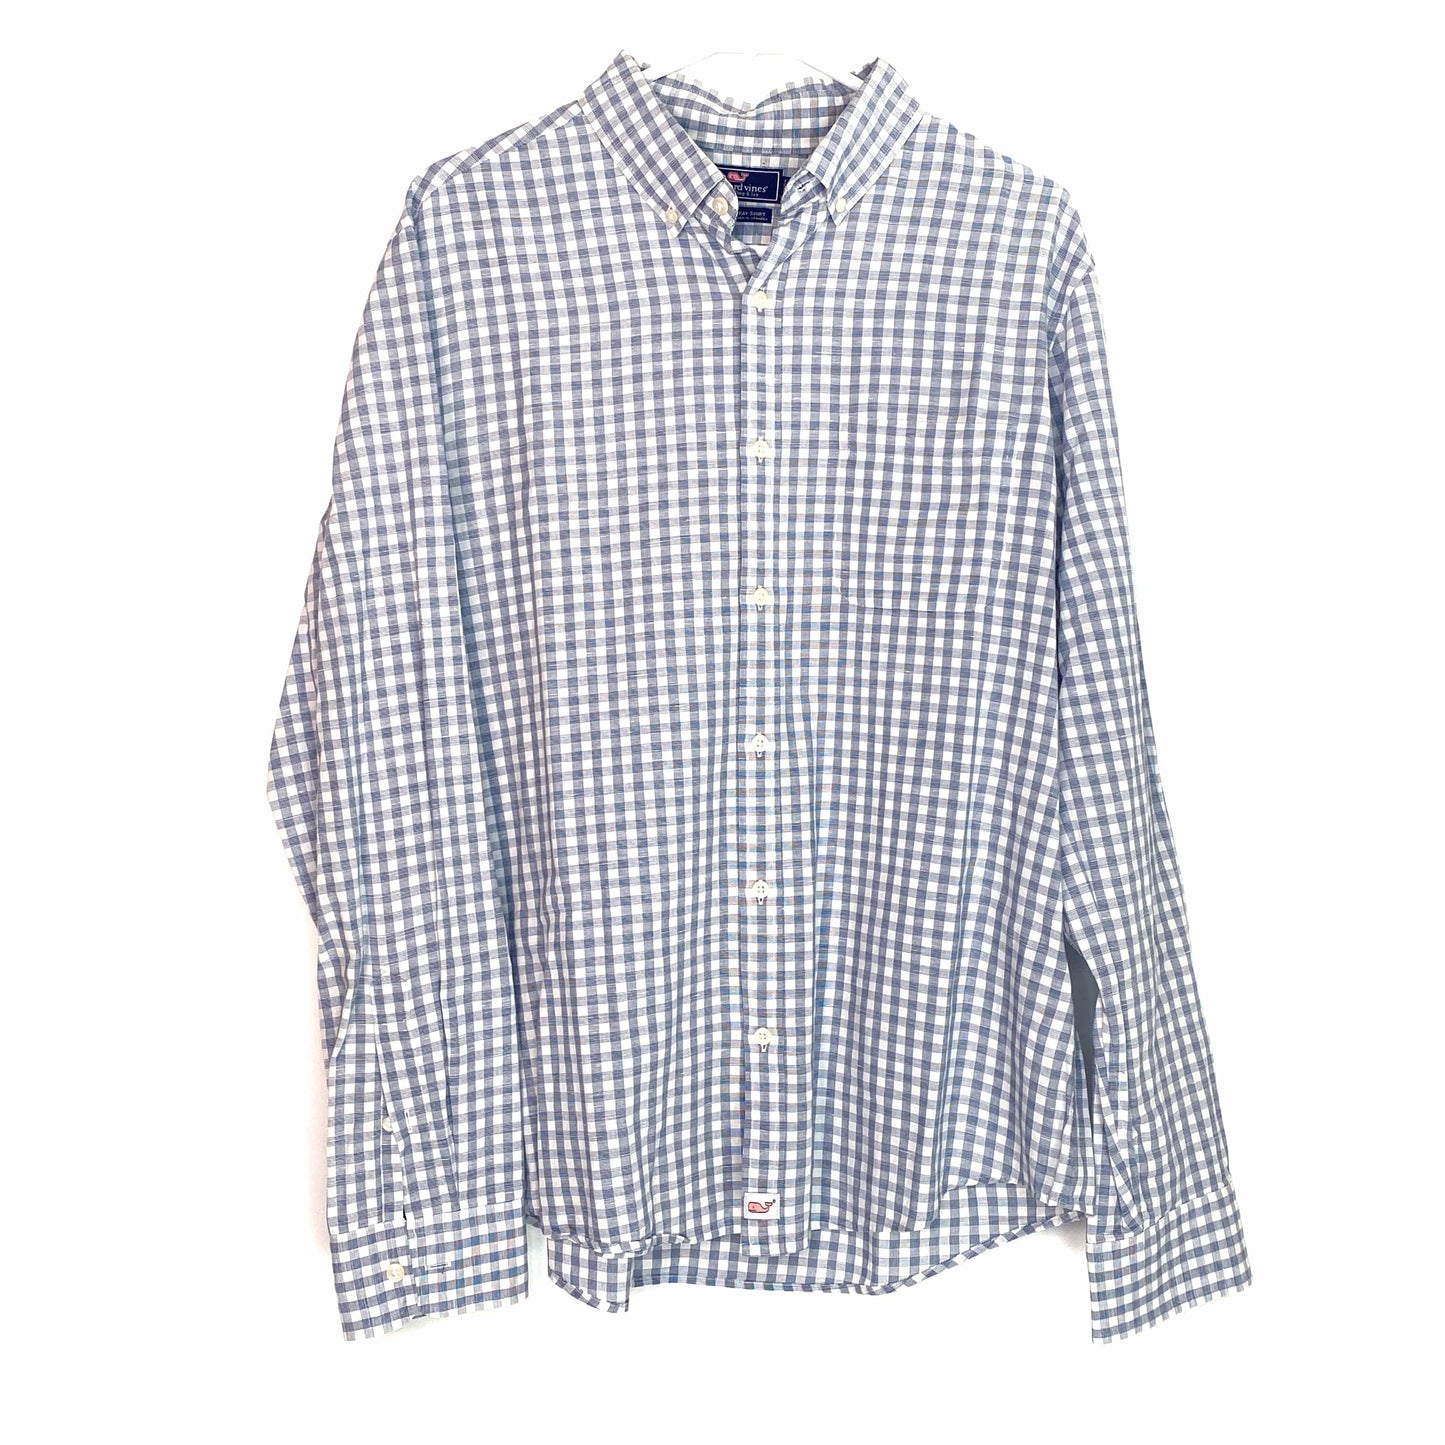 Sophisticated Vineyard Vines Men's Gray White Check Plaid Button-Up Shirt L Long Sleeve